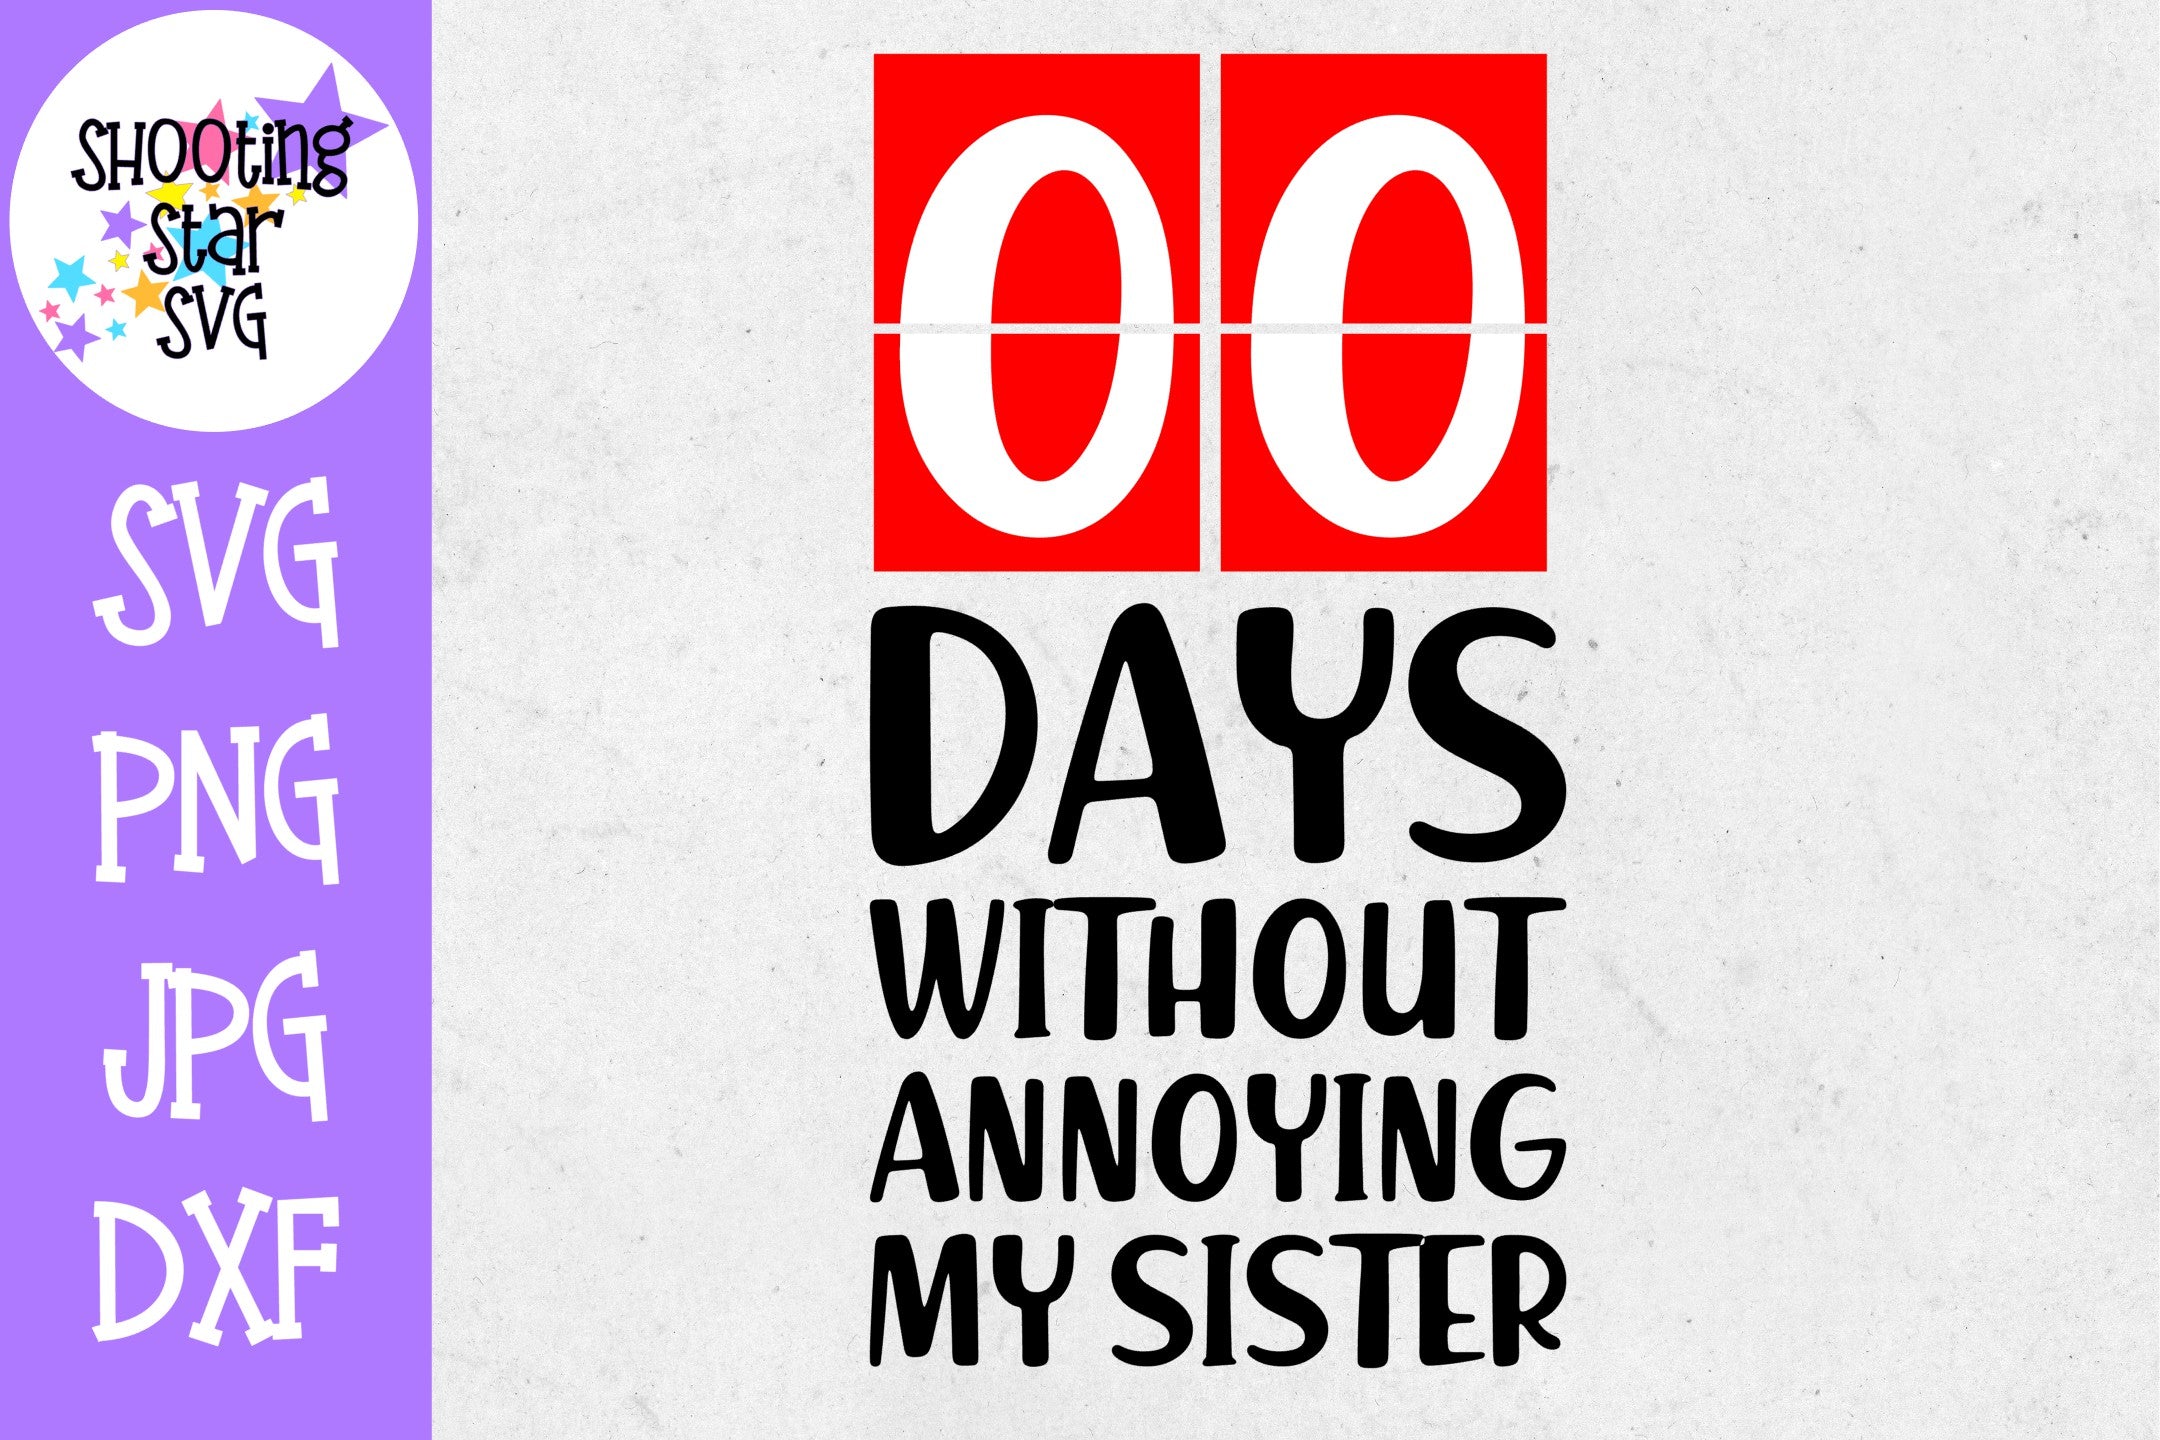 Zero Days Without Annoying my Sister SVG - Sassy SVG